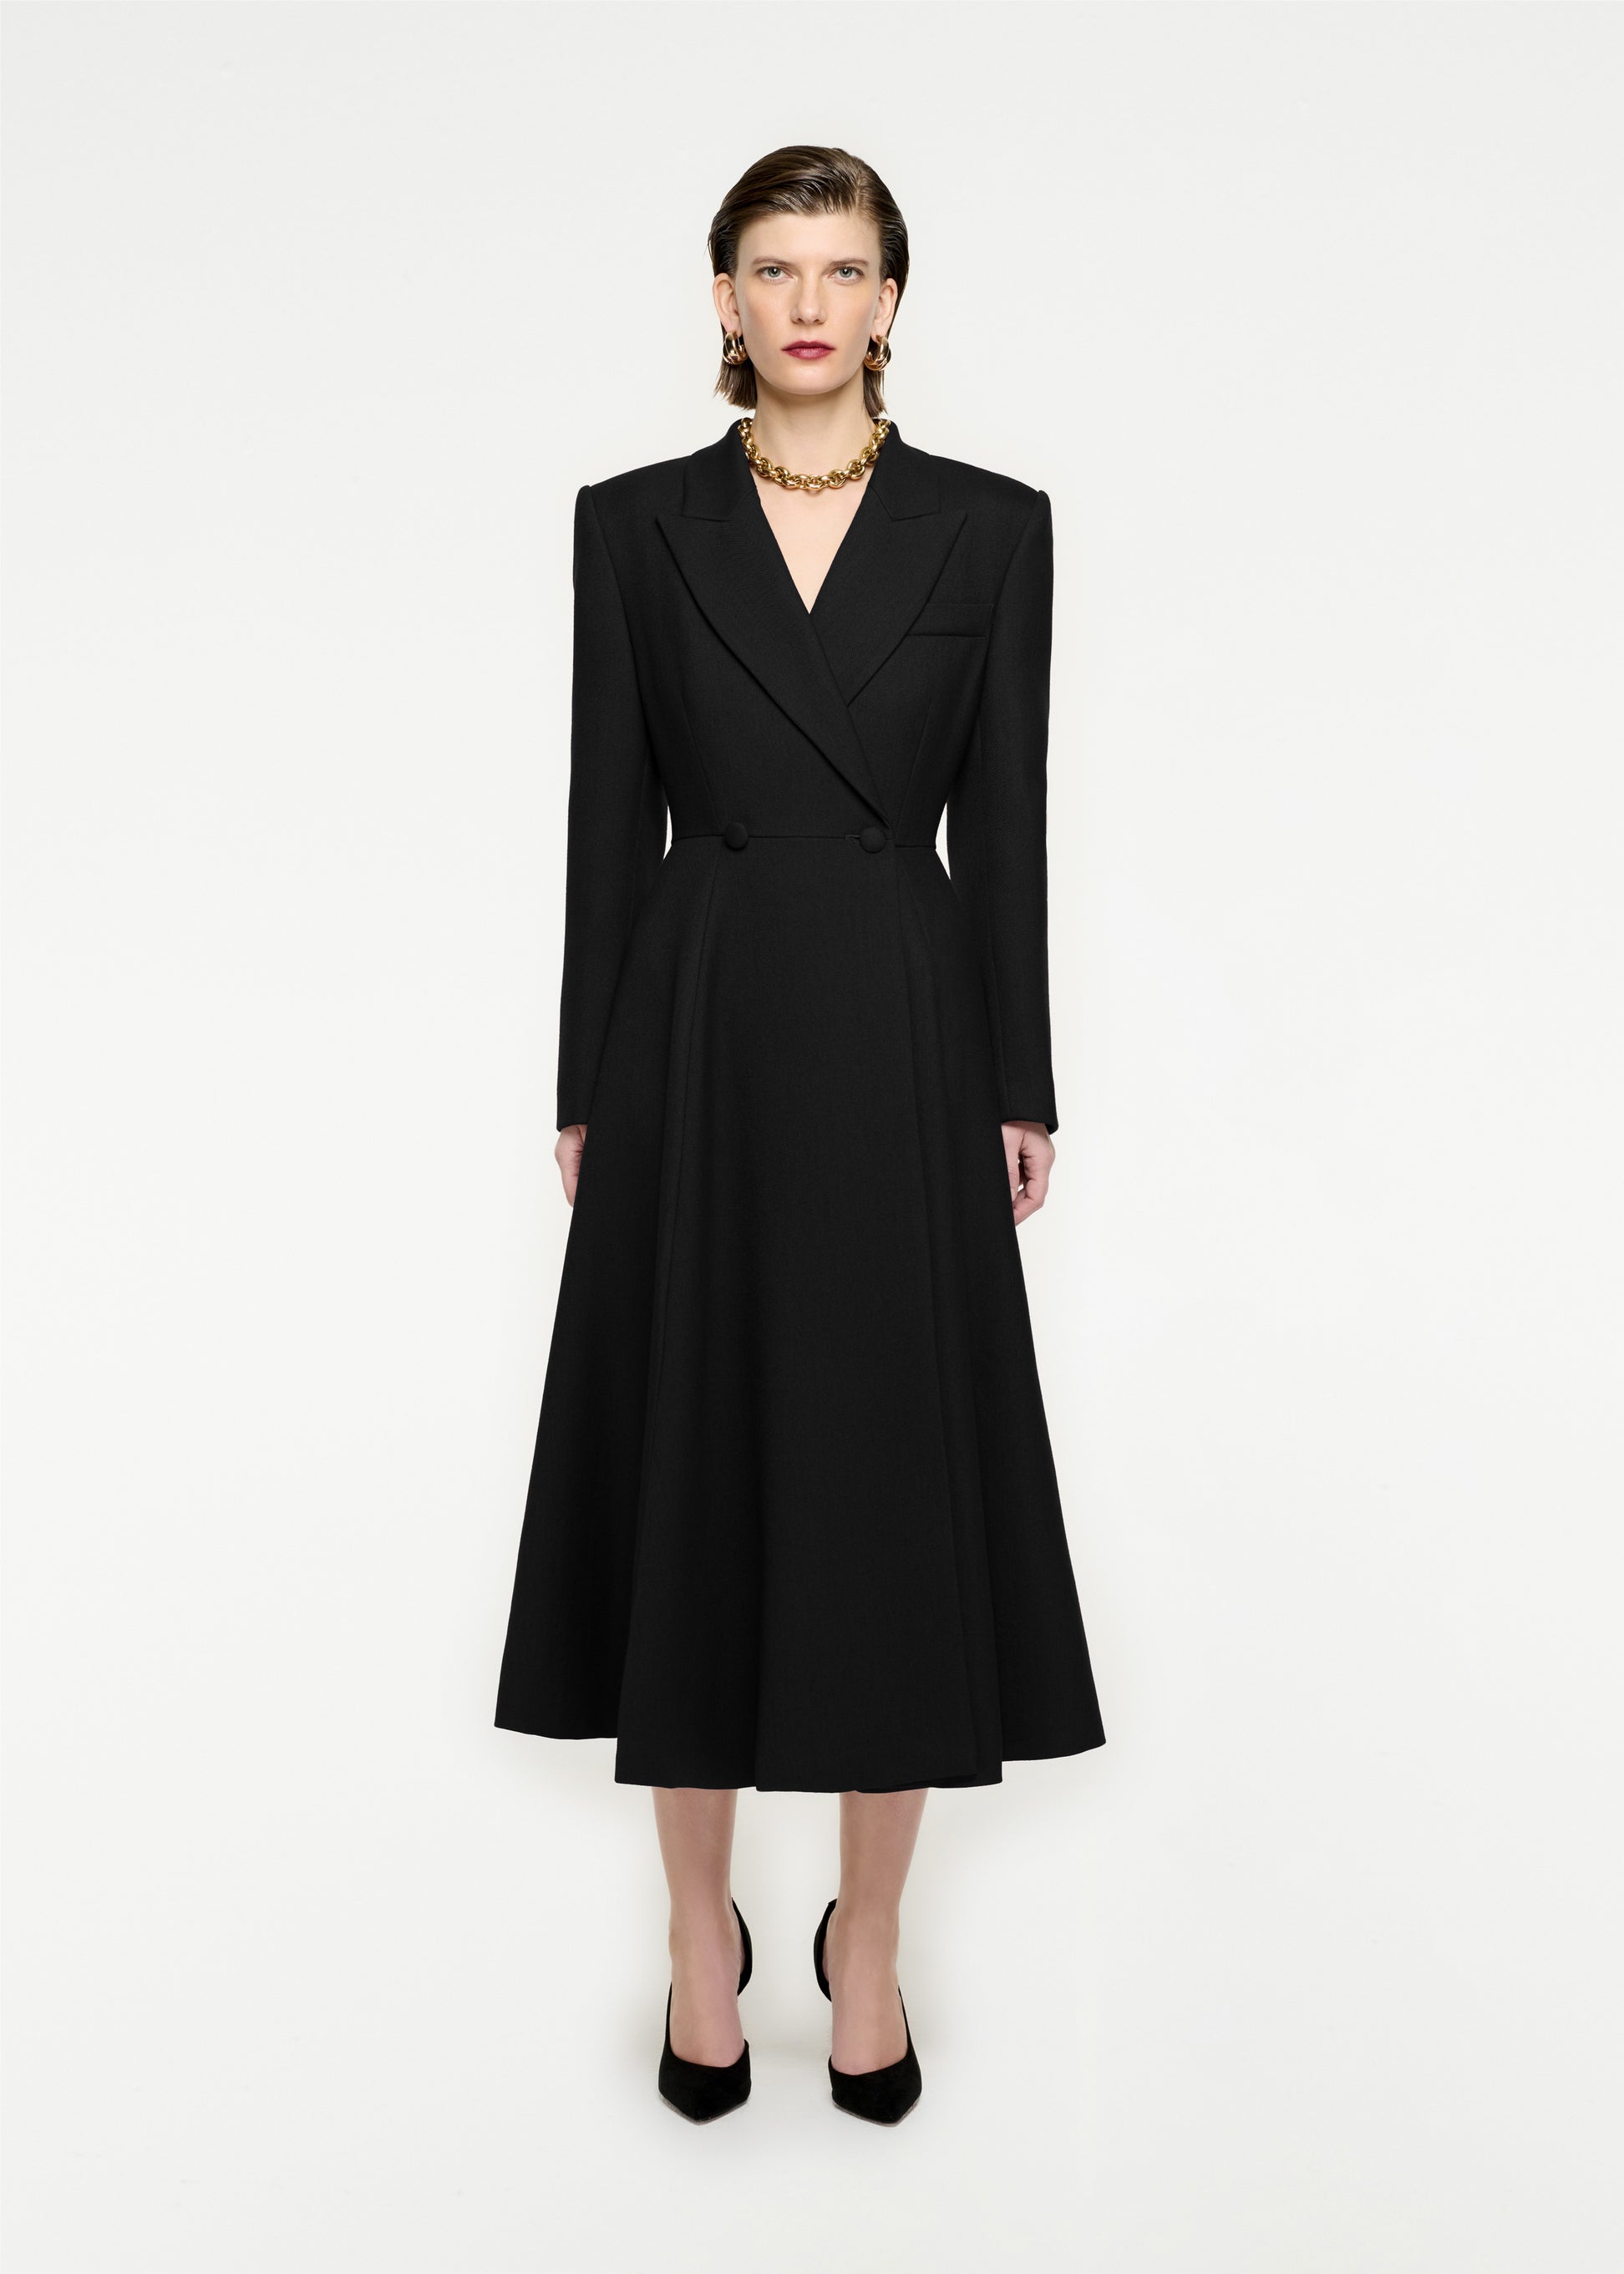 Woman wearing the Wool Twill Coat in Black